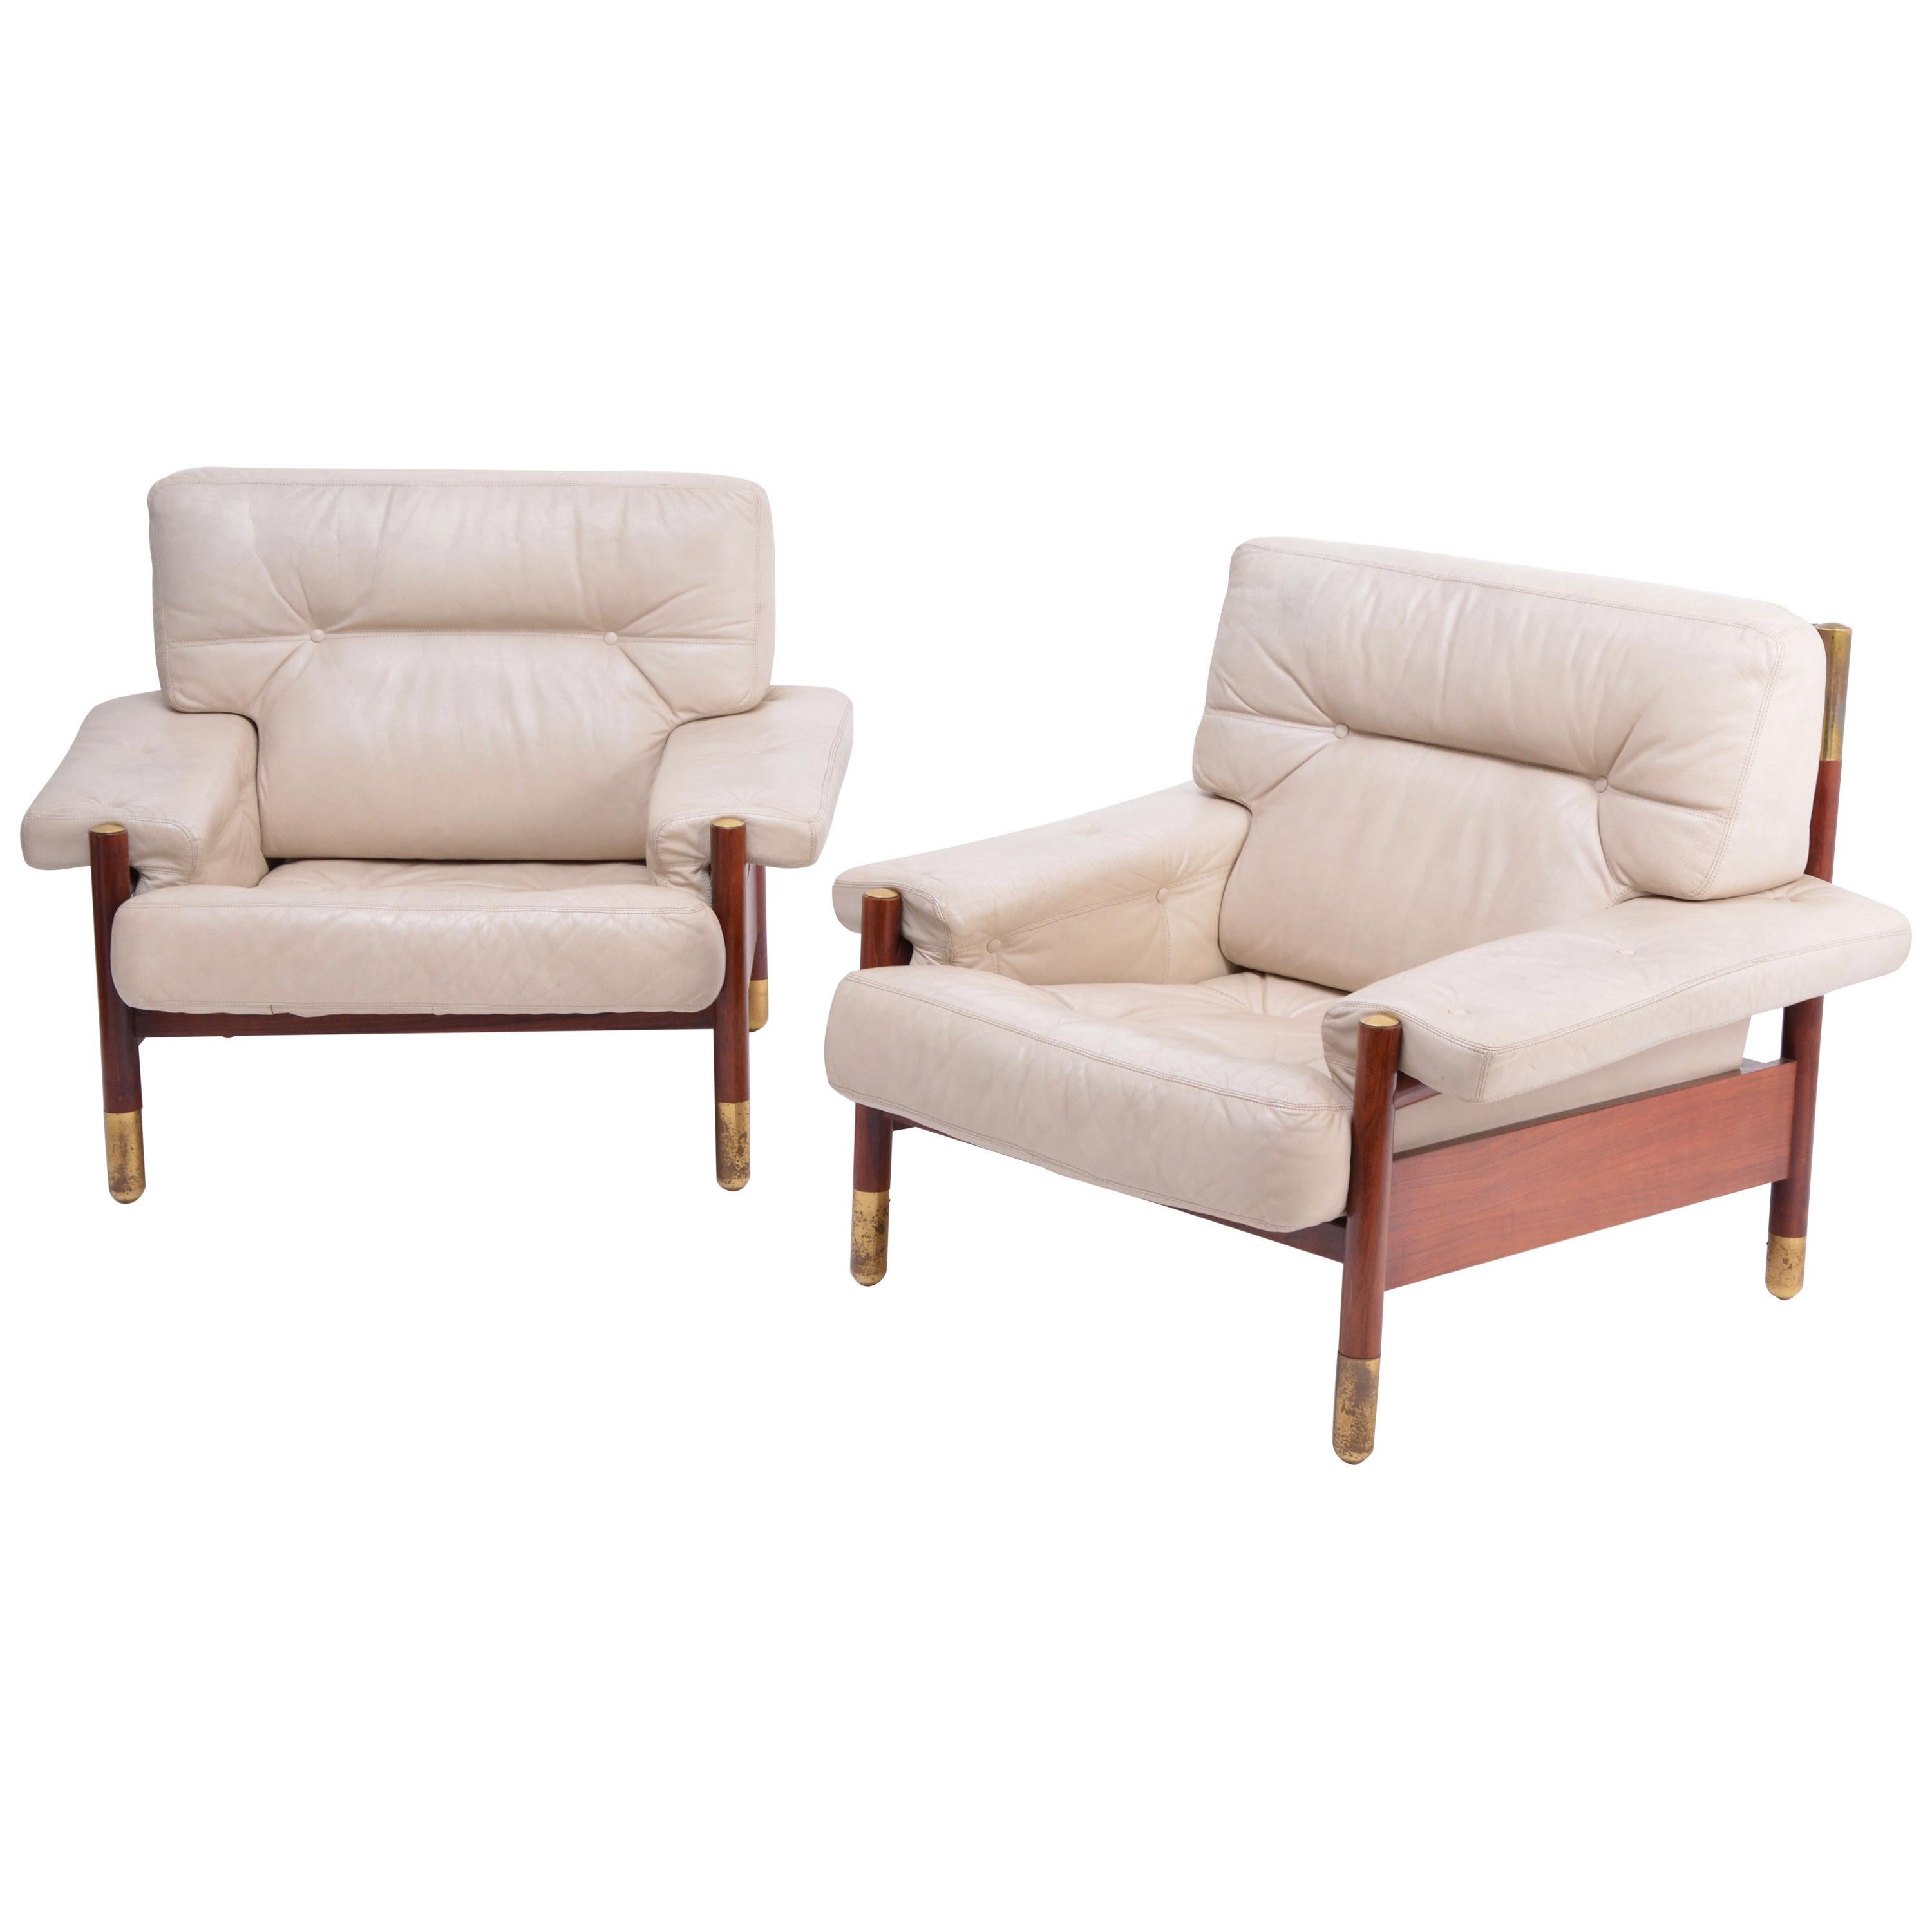 Pair of Beige Mid-Century Modern Lounge Chairs Model "Sella" by Carlo de Carli